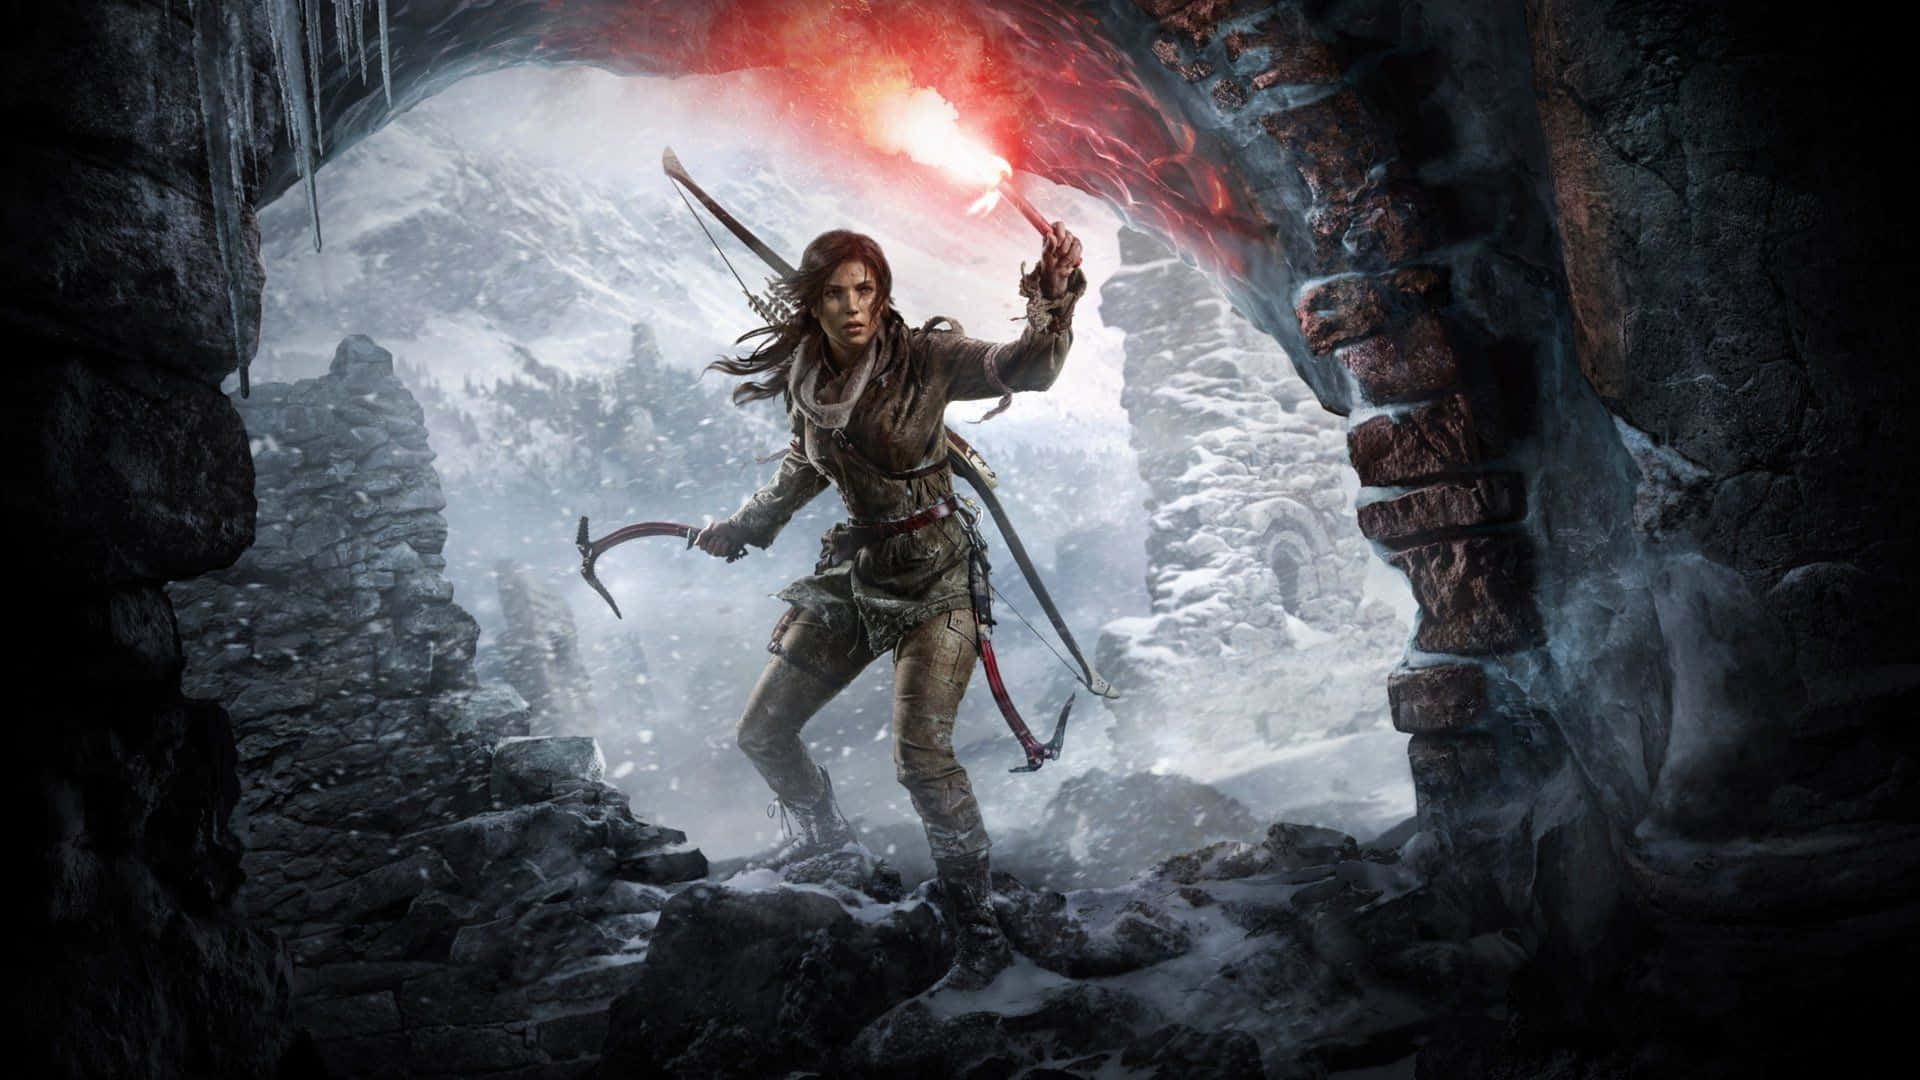 Lara Croft Innovating Her Way Through The World Of Shadow Of The Tomb Raider